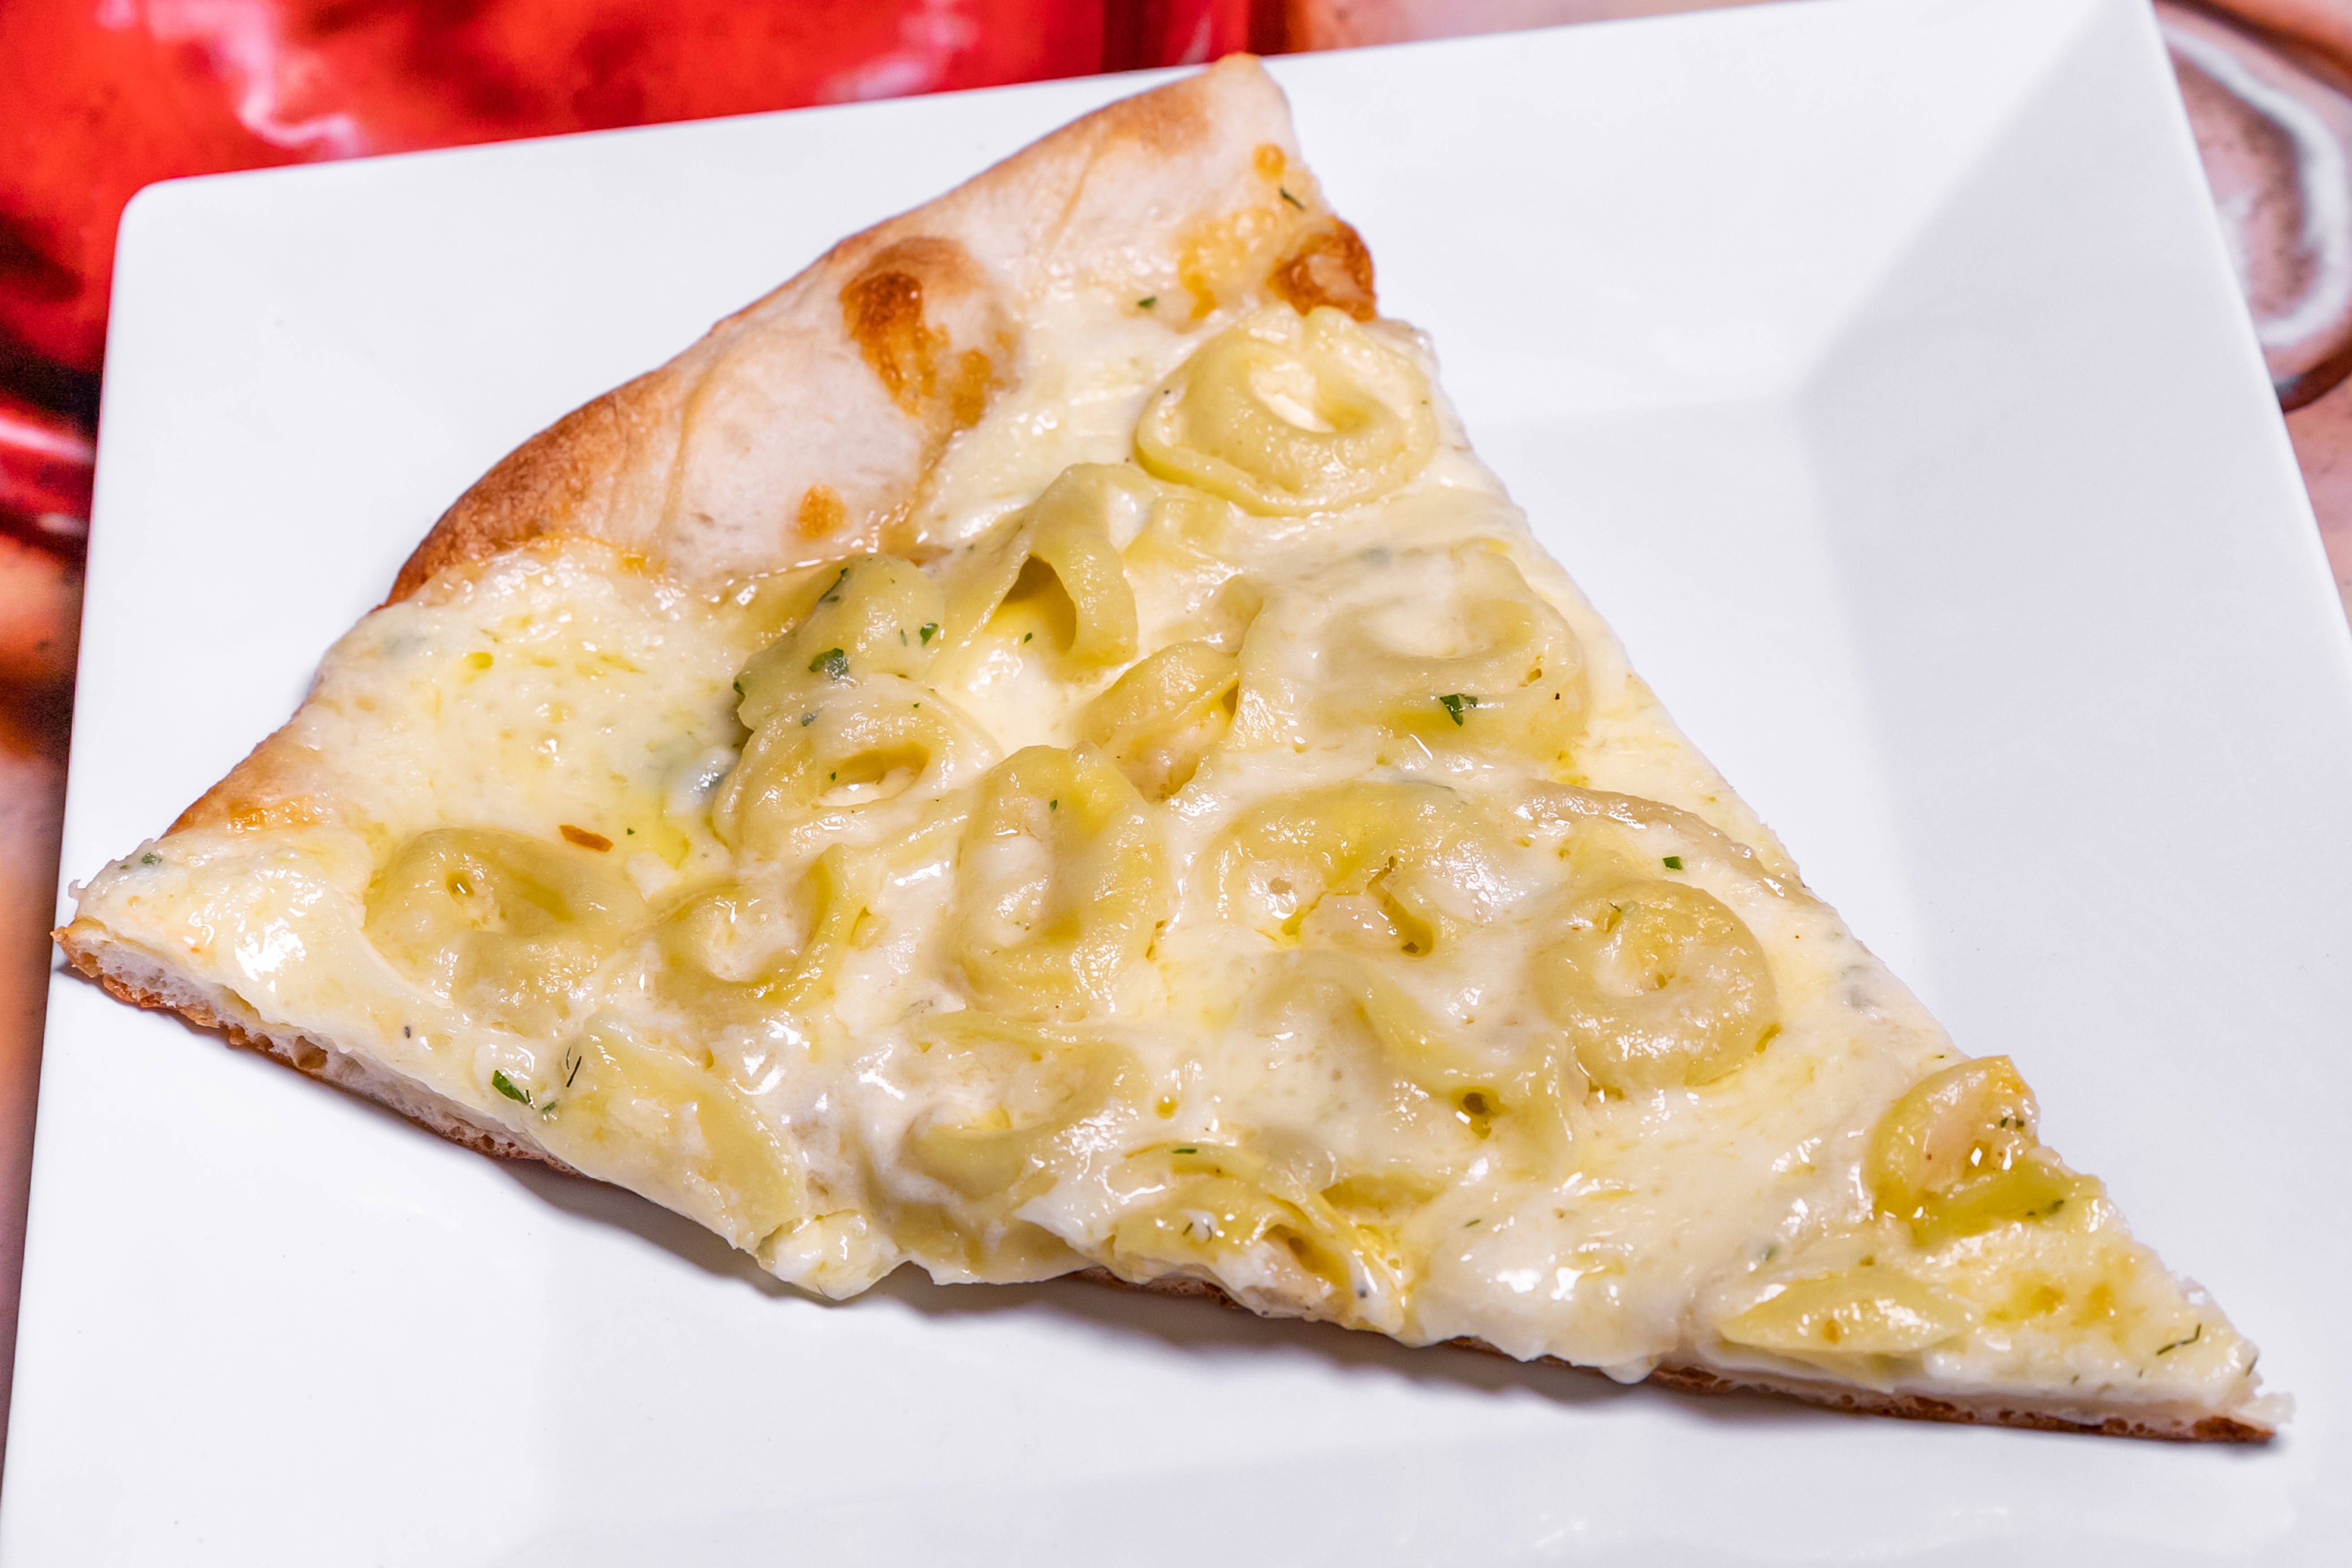 Papa Luigi Pizza - CHEESE STEAK CURLY FRY PIZZA